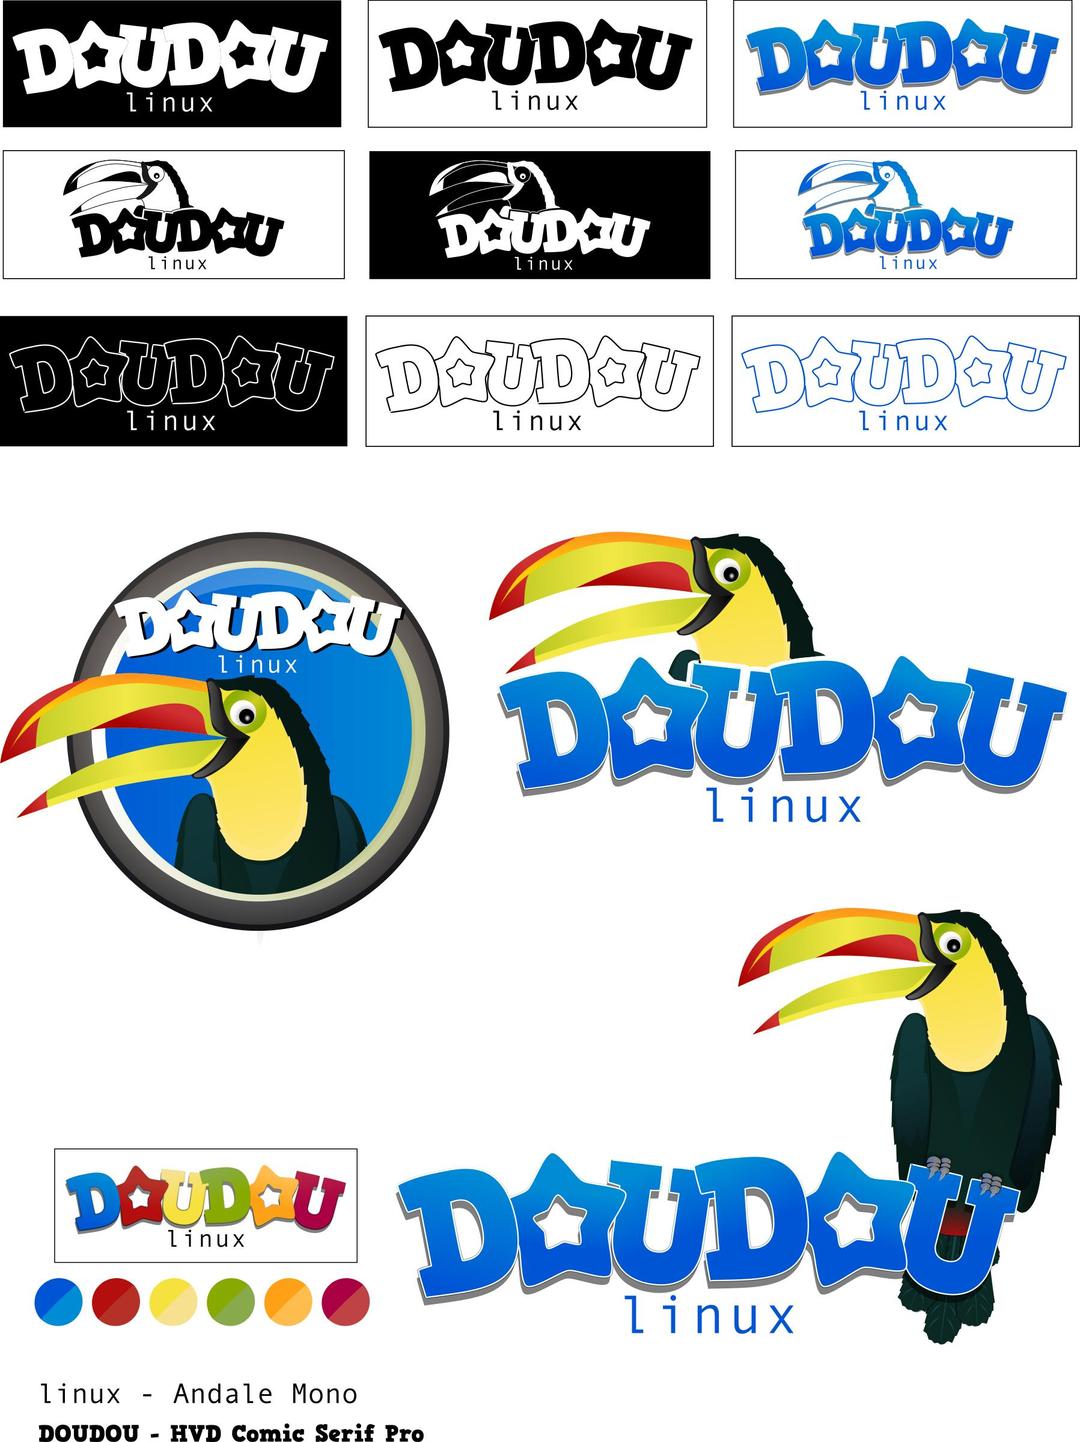 DouDou linux - Mascot and Logo Contest png transparent